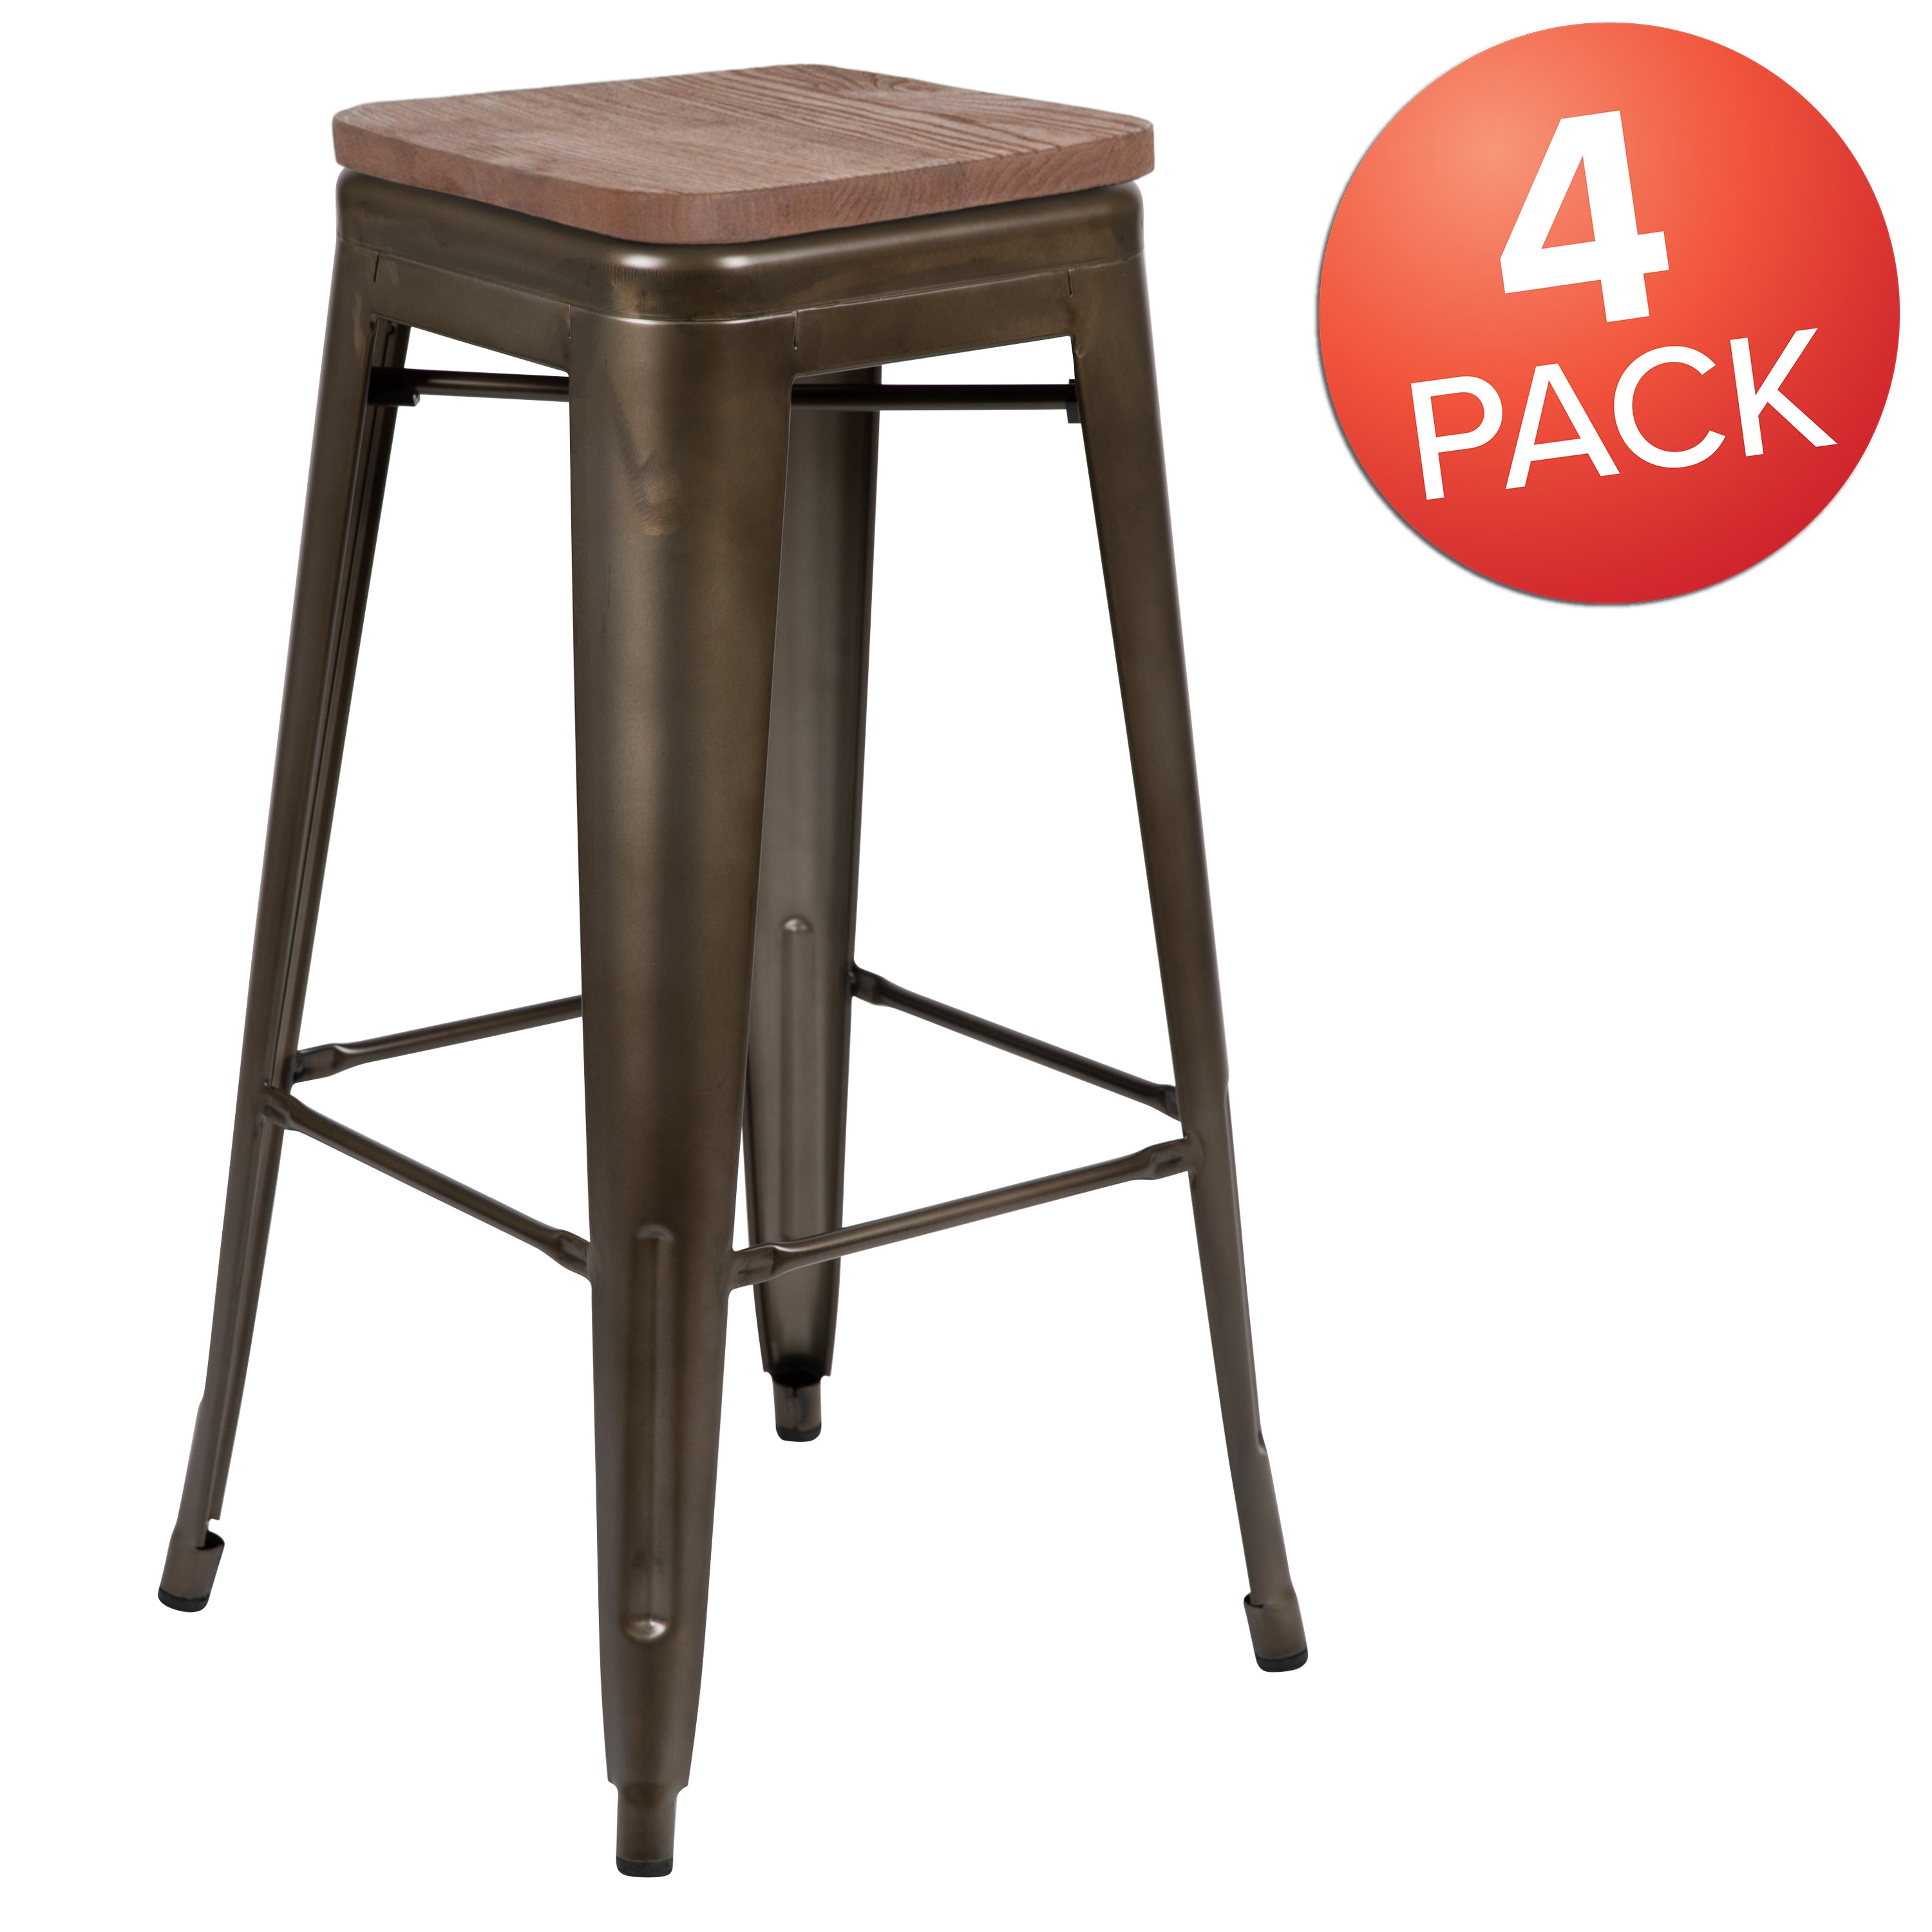 30" High Metal Indoor Bar Stool with Wood Seat - Stackable Set of 4-Indoor/Outdoor Bar Stool-Flash Furniture-Wall2Wall Furnishings